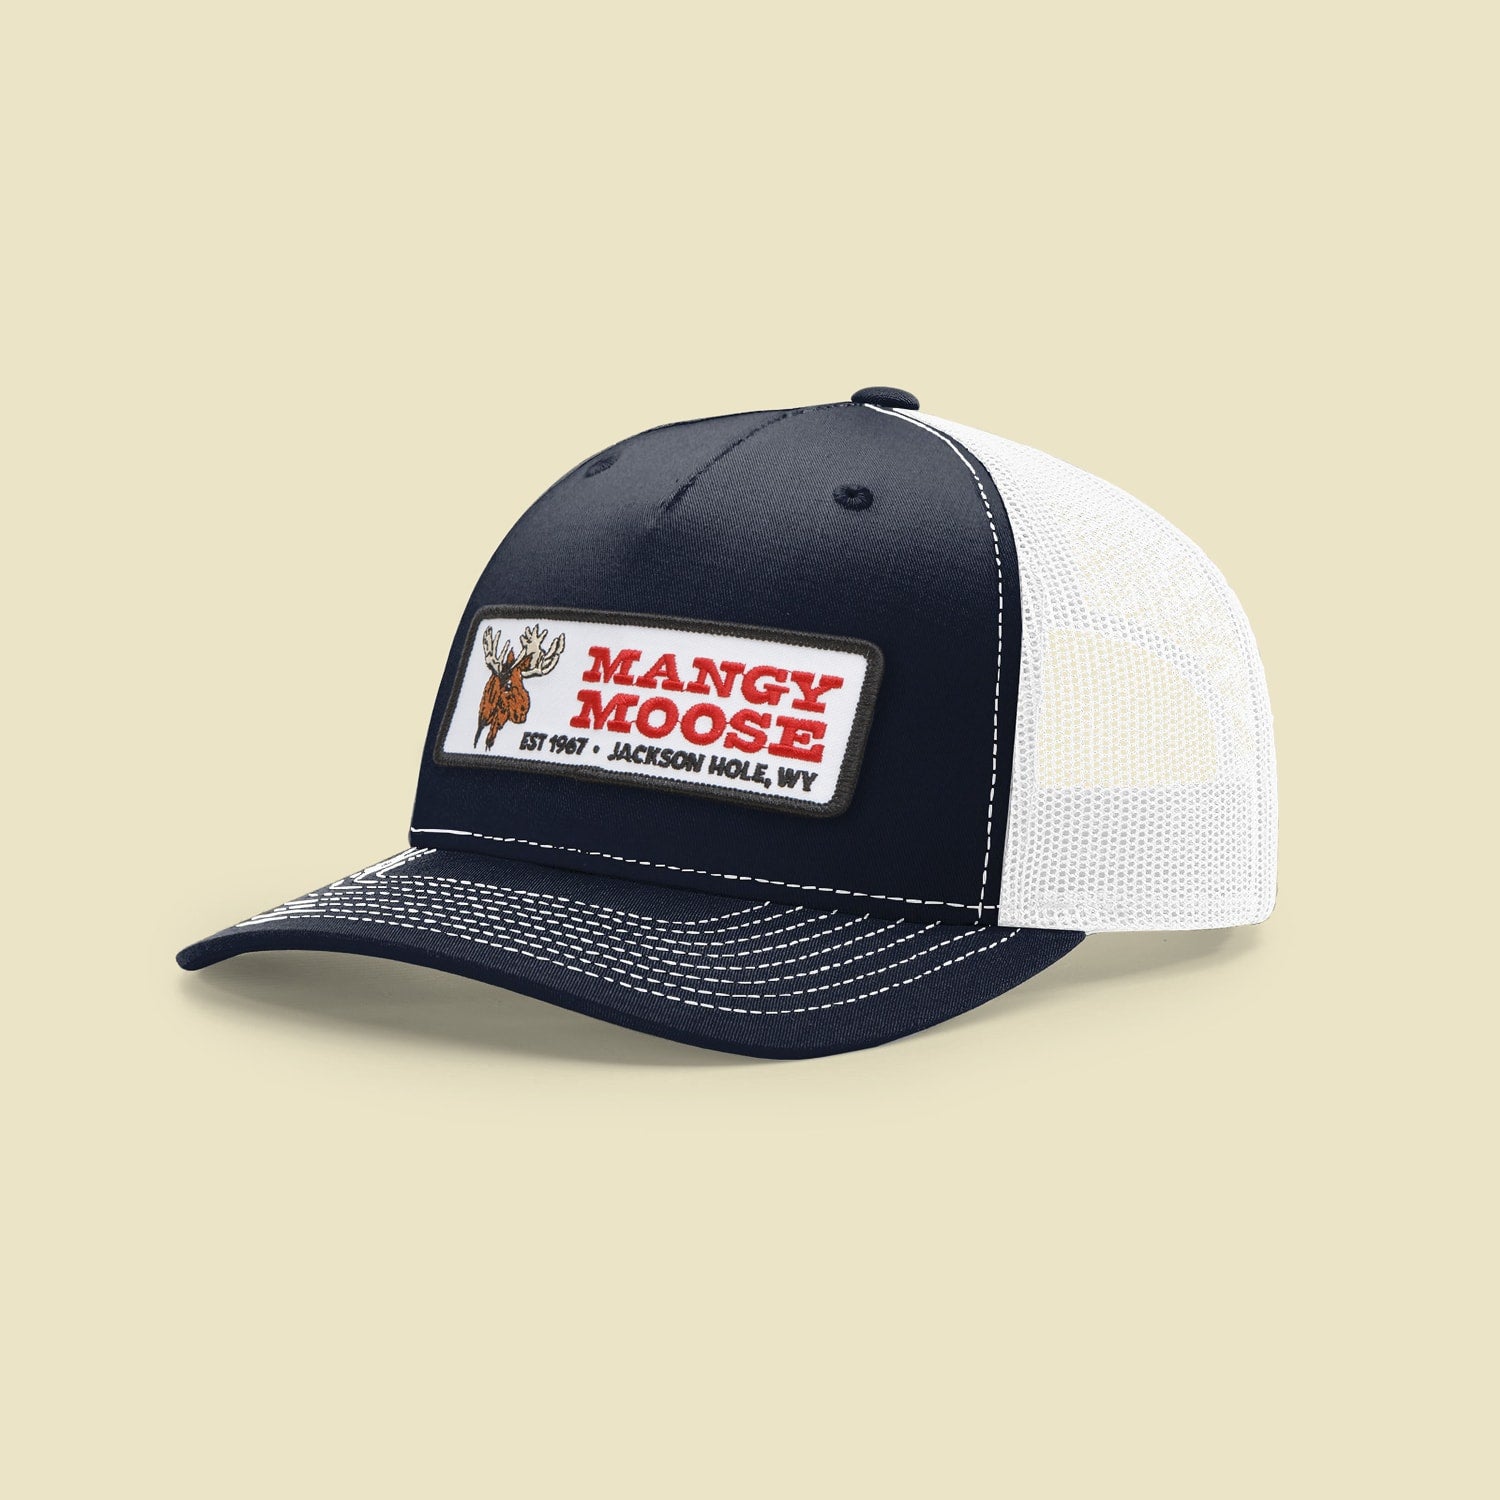 Manny Trucker Hat